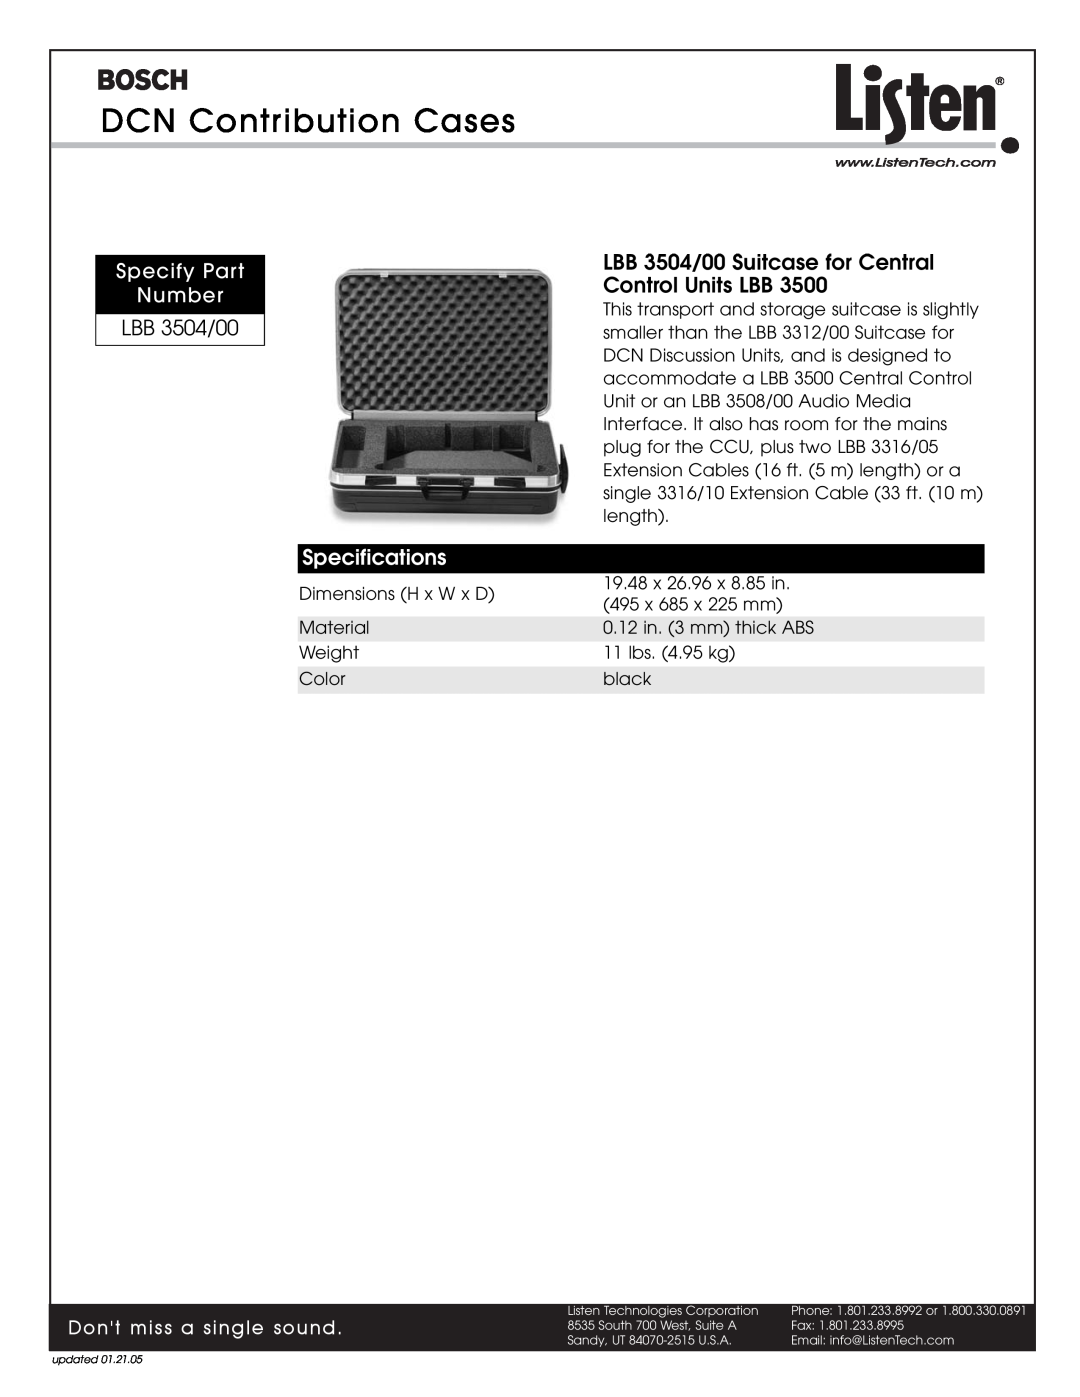 Listen Technologies LBB 3312, LBB 3500 LBB 3504/00 Suitcase for Central, Control Units LBB, DCN Contribution Cases 